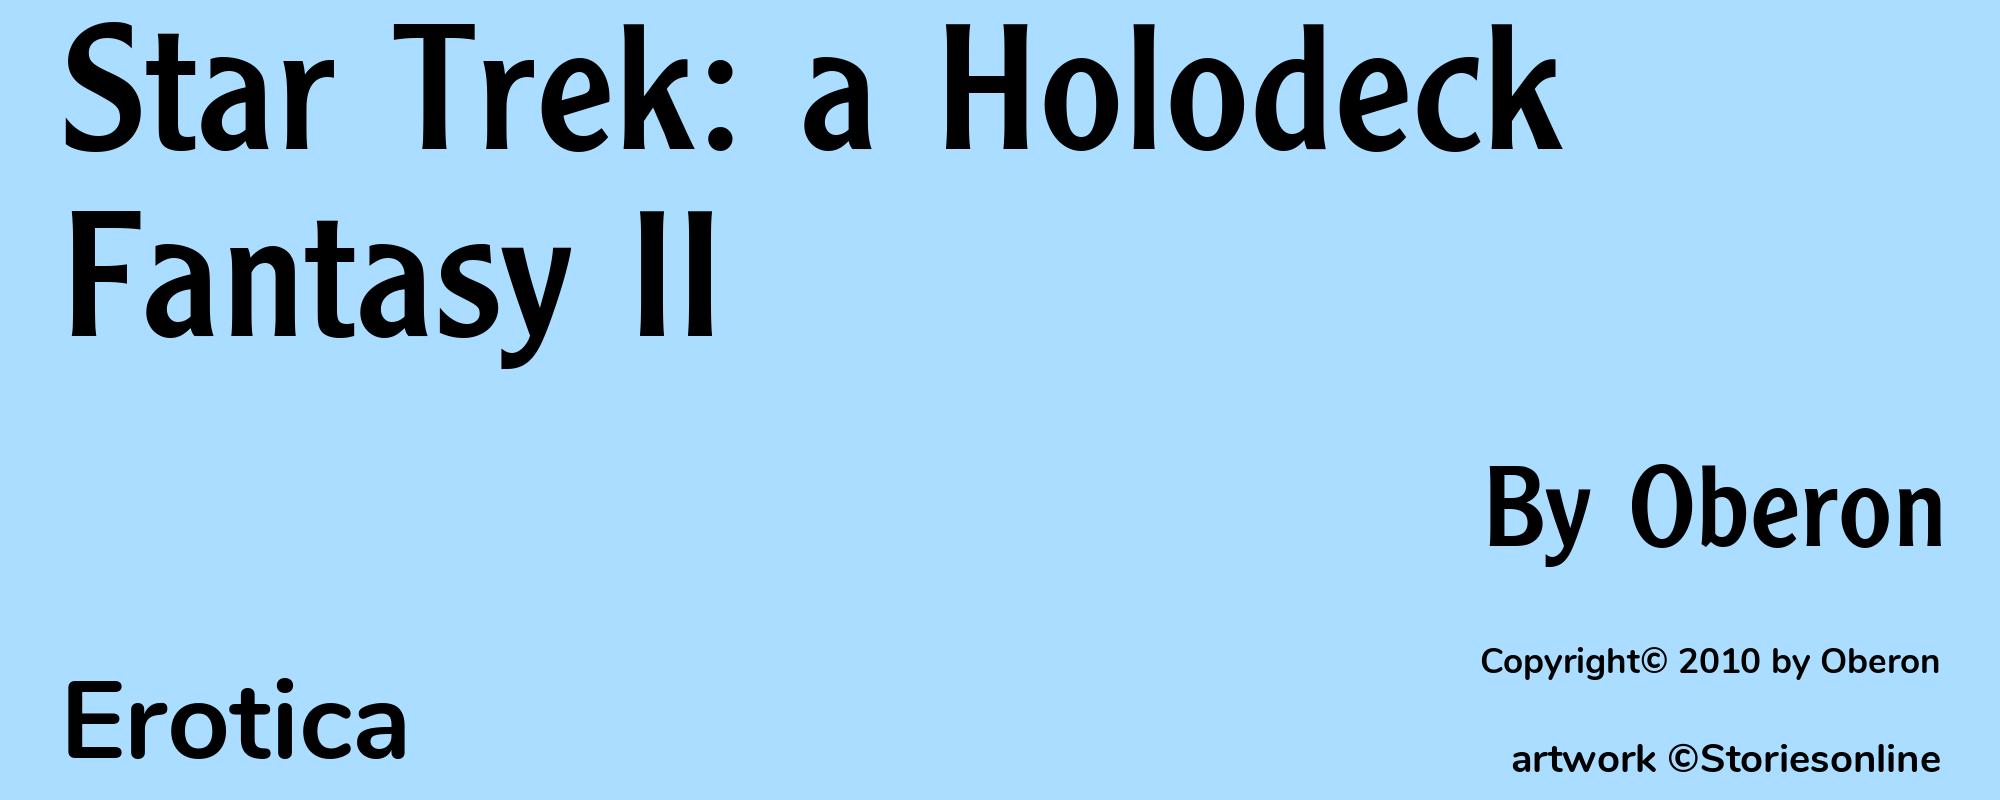 Star Trek: a Holodeck Fantasy II - Cover